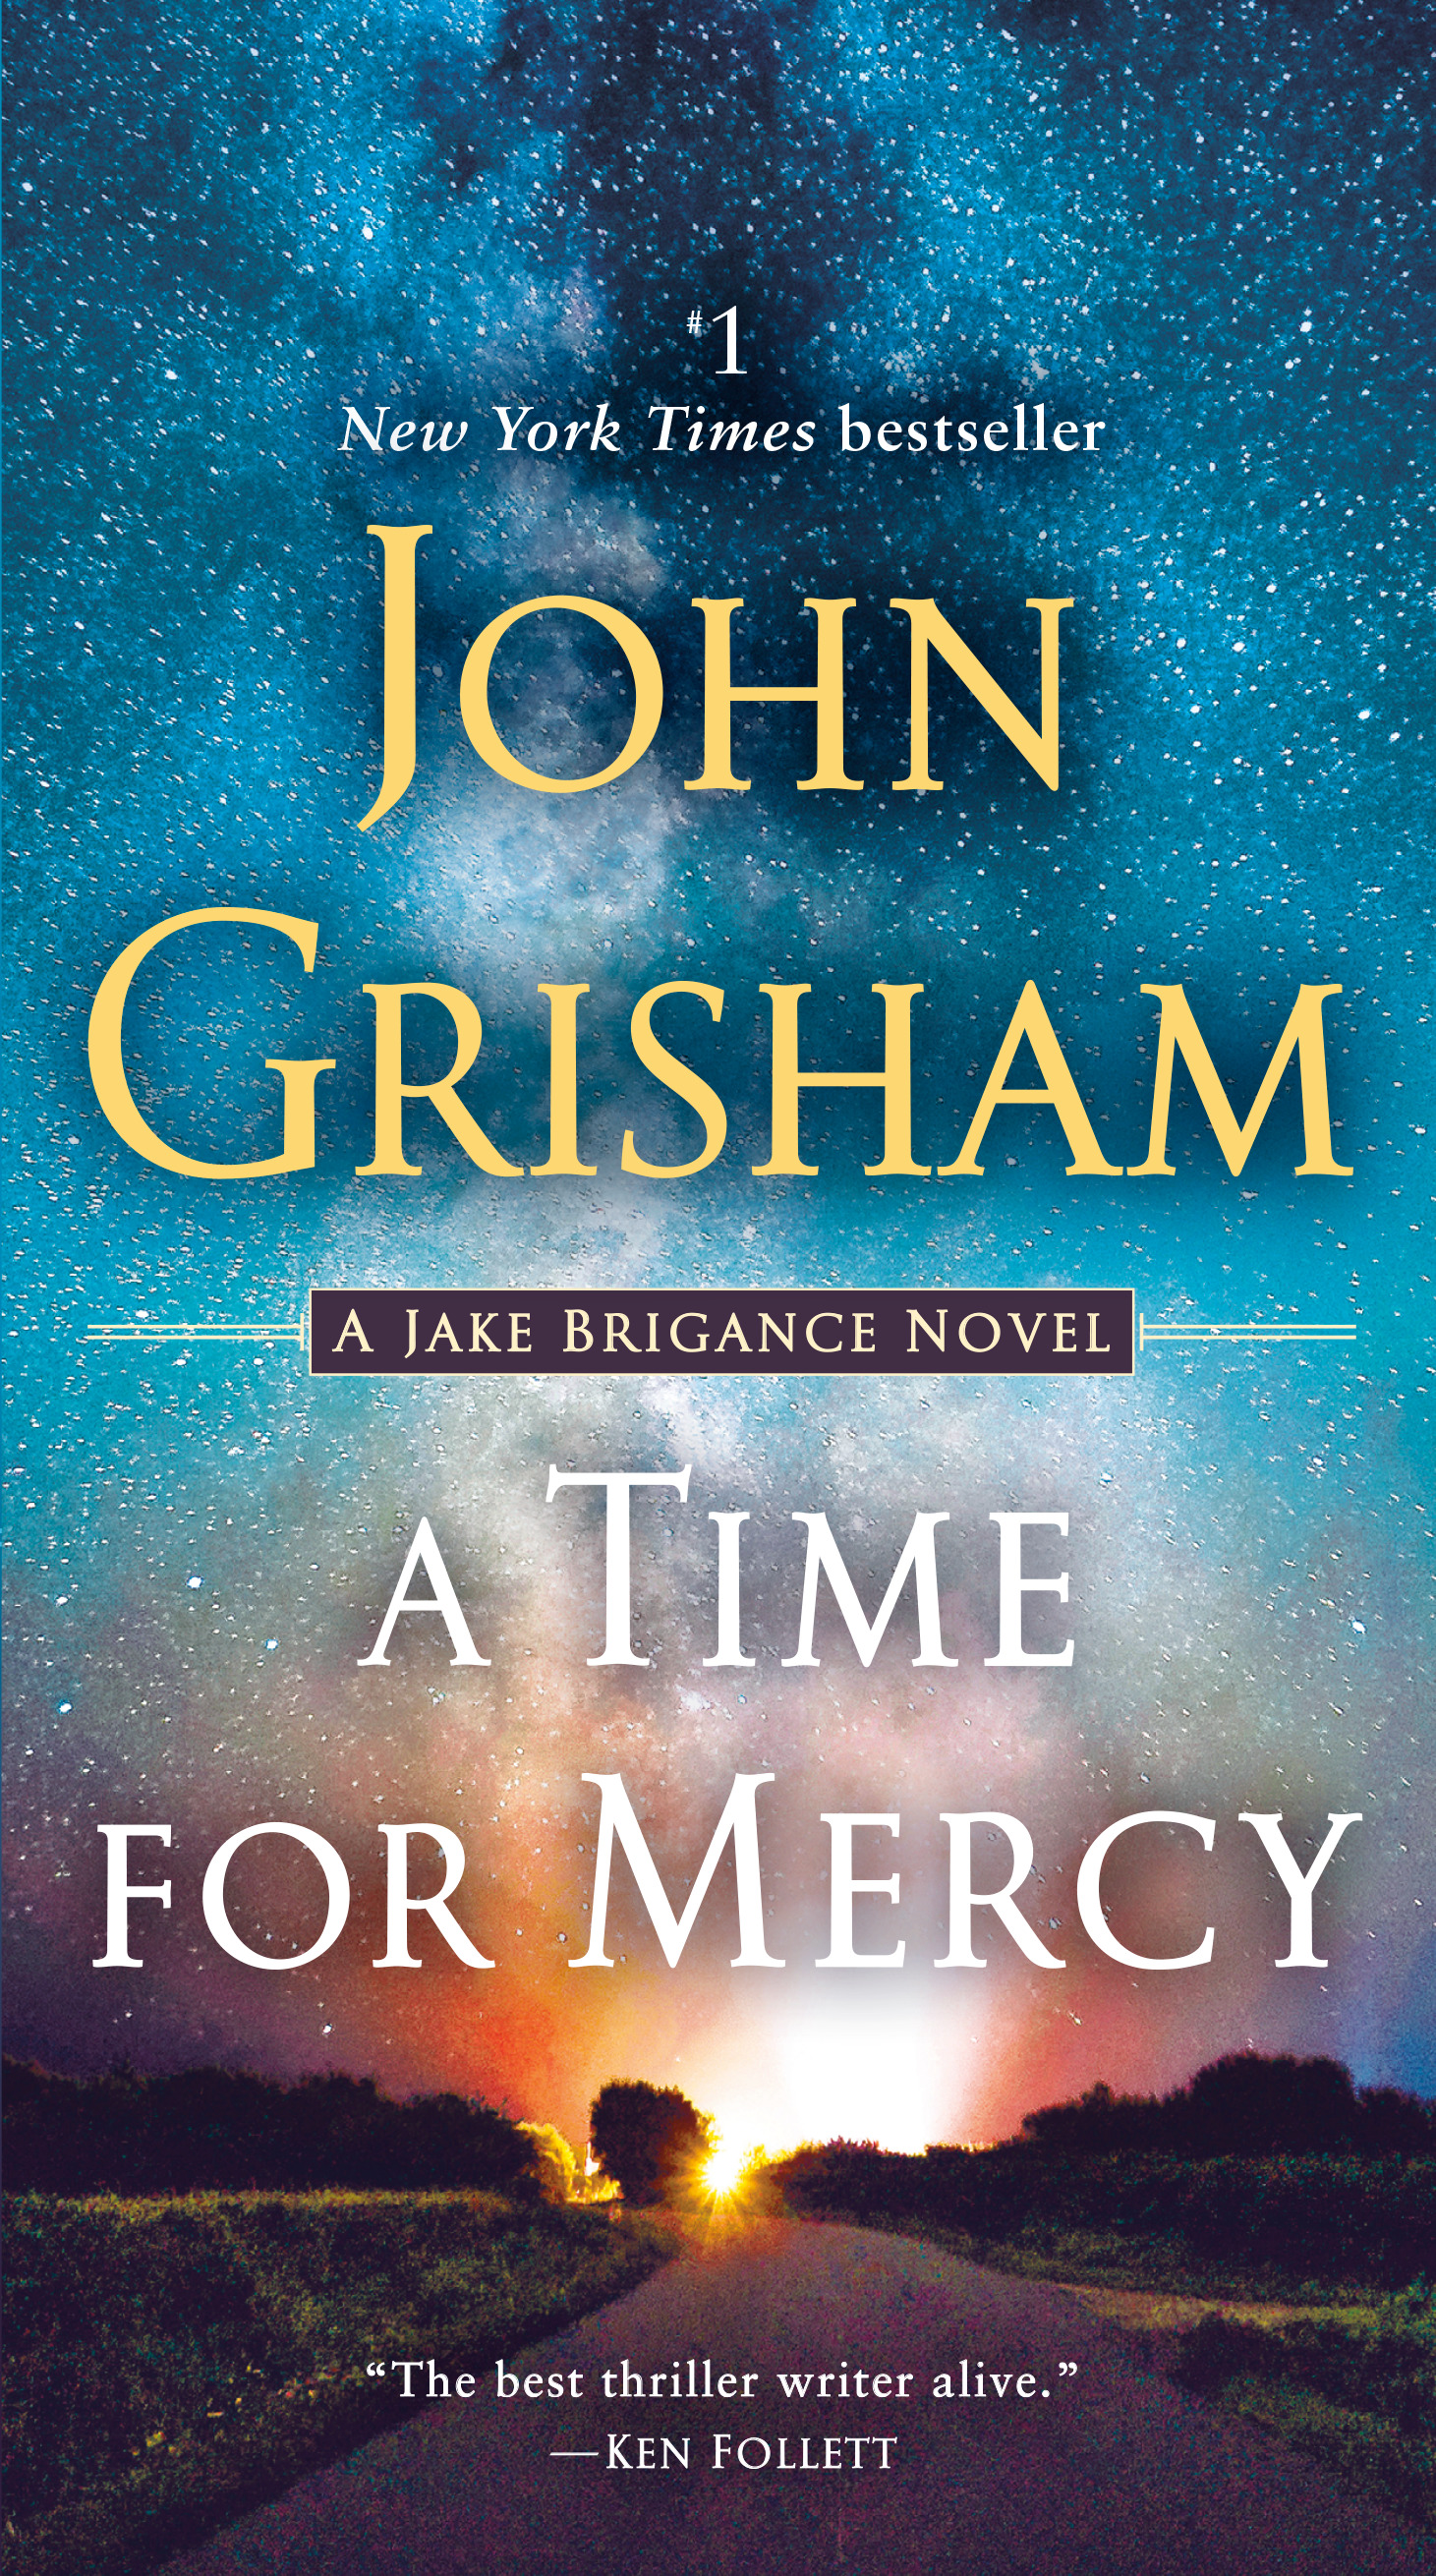 Jake Brigance T.03 - A Time for Mercy  | Grisham, John